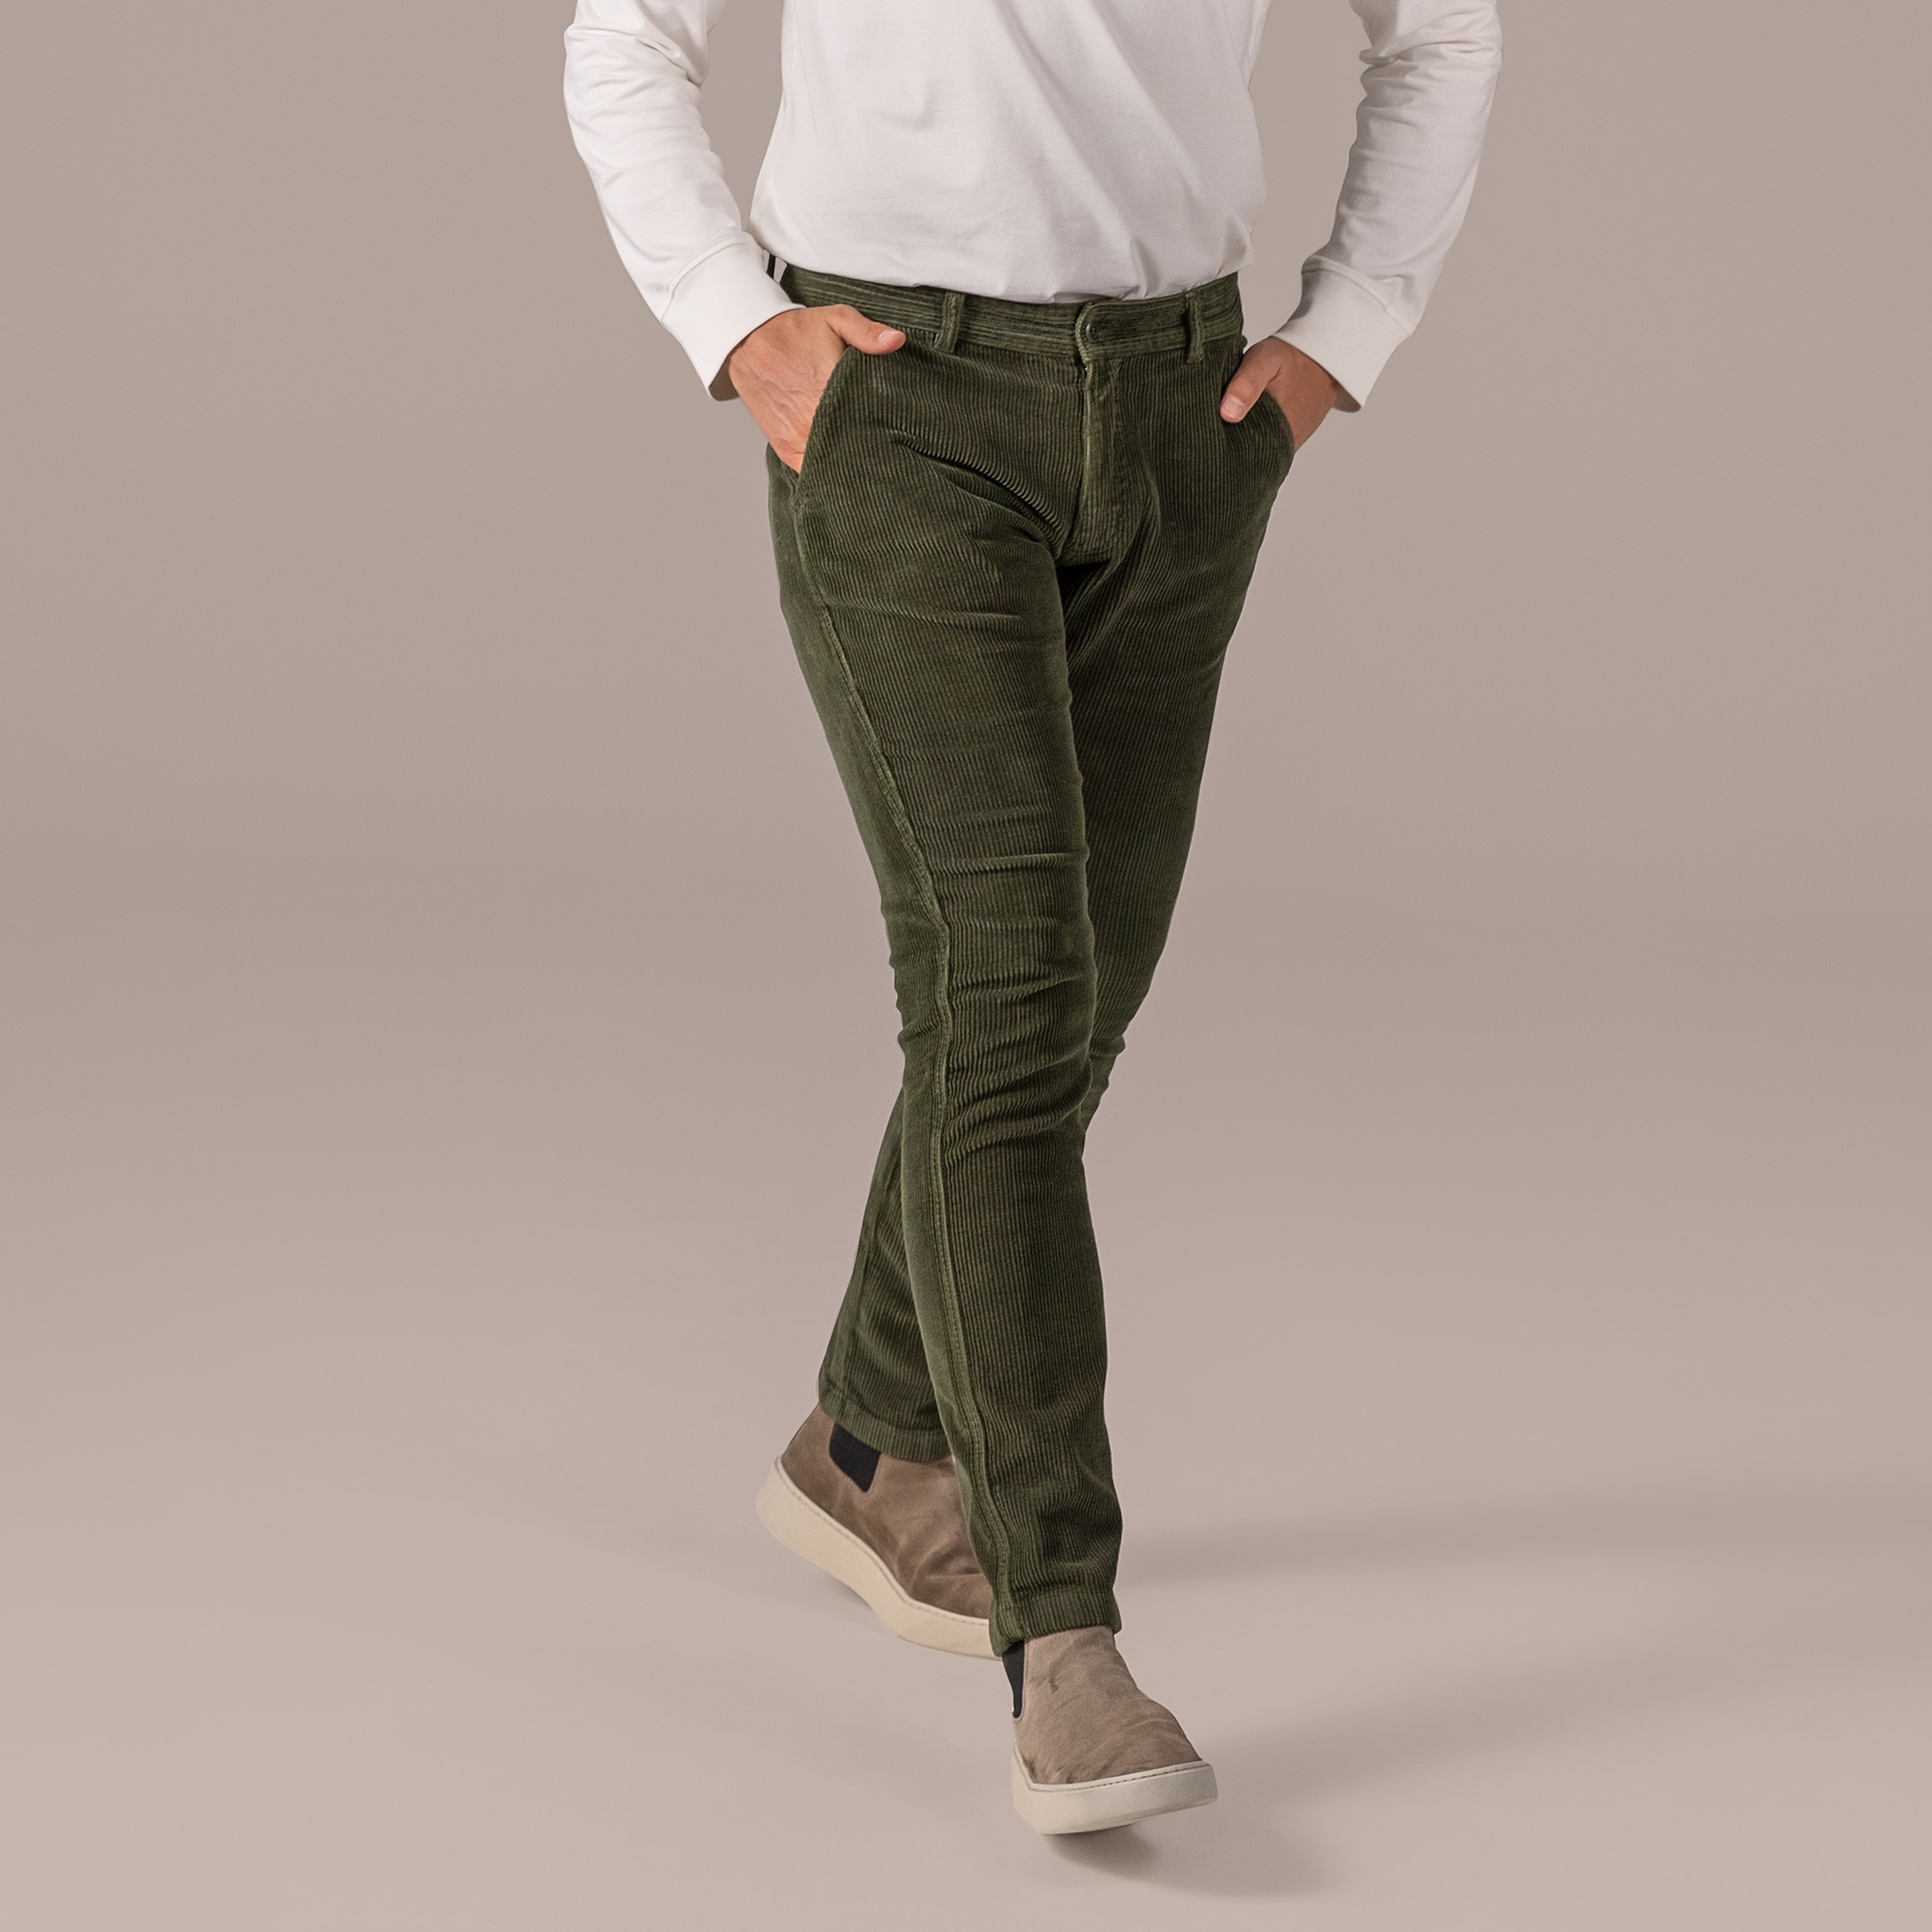 Regular Fit Corduroy trousers - Khaki green - Men | H&M IN